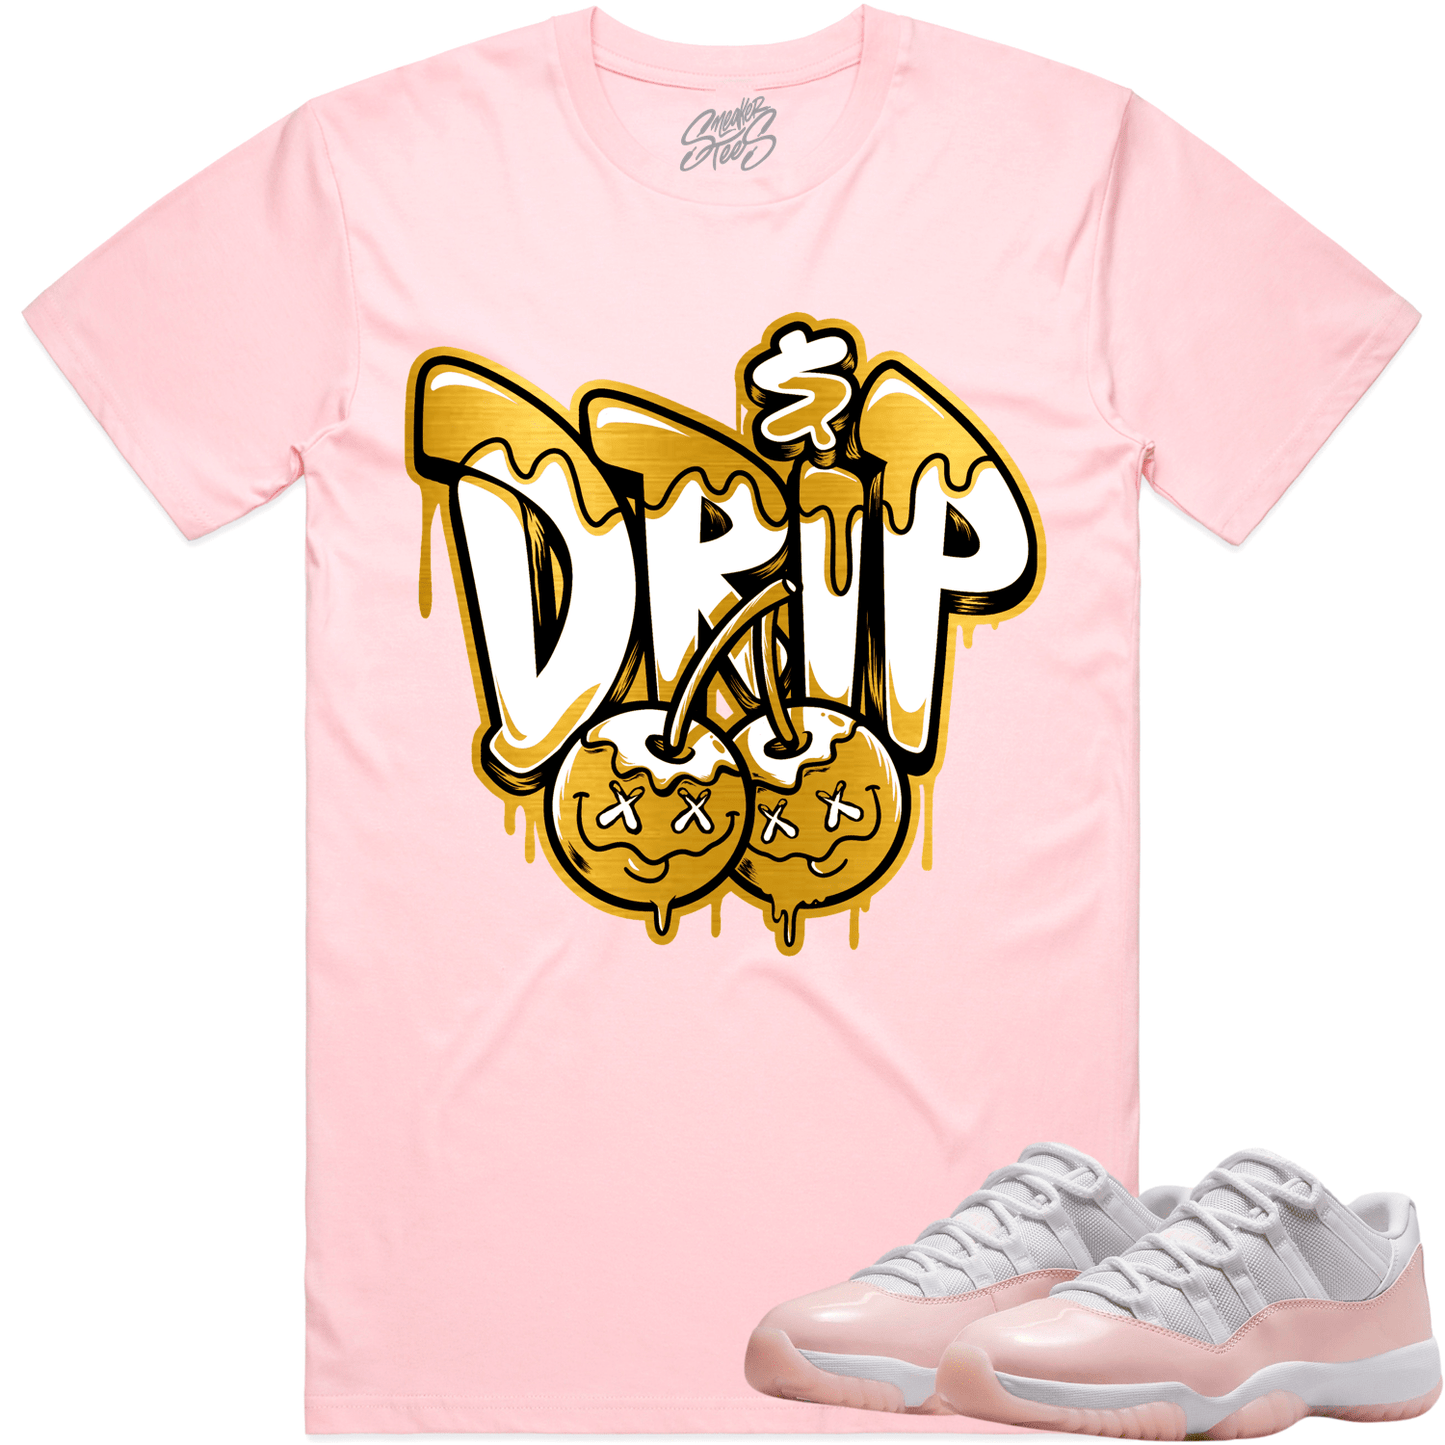 Legend Pink 11s Shirt - Jordan 11 Low Pink Sneaker Tees - Money Drip